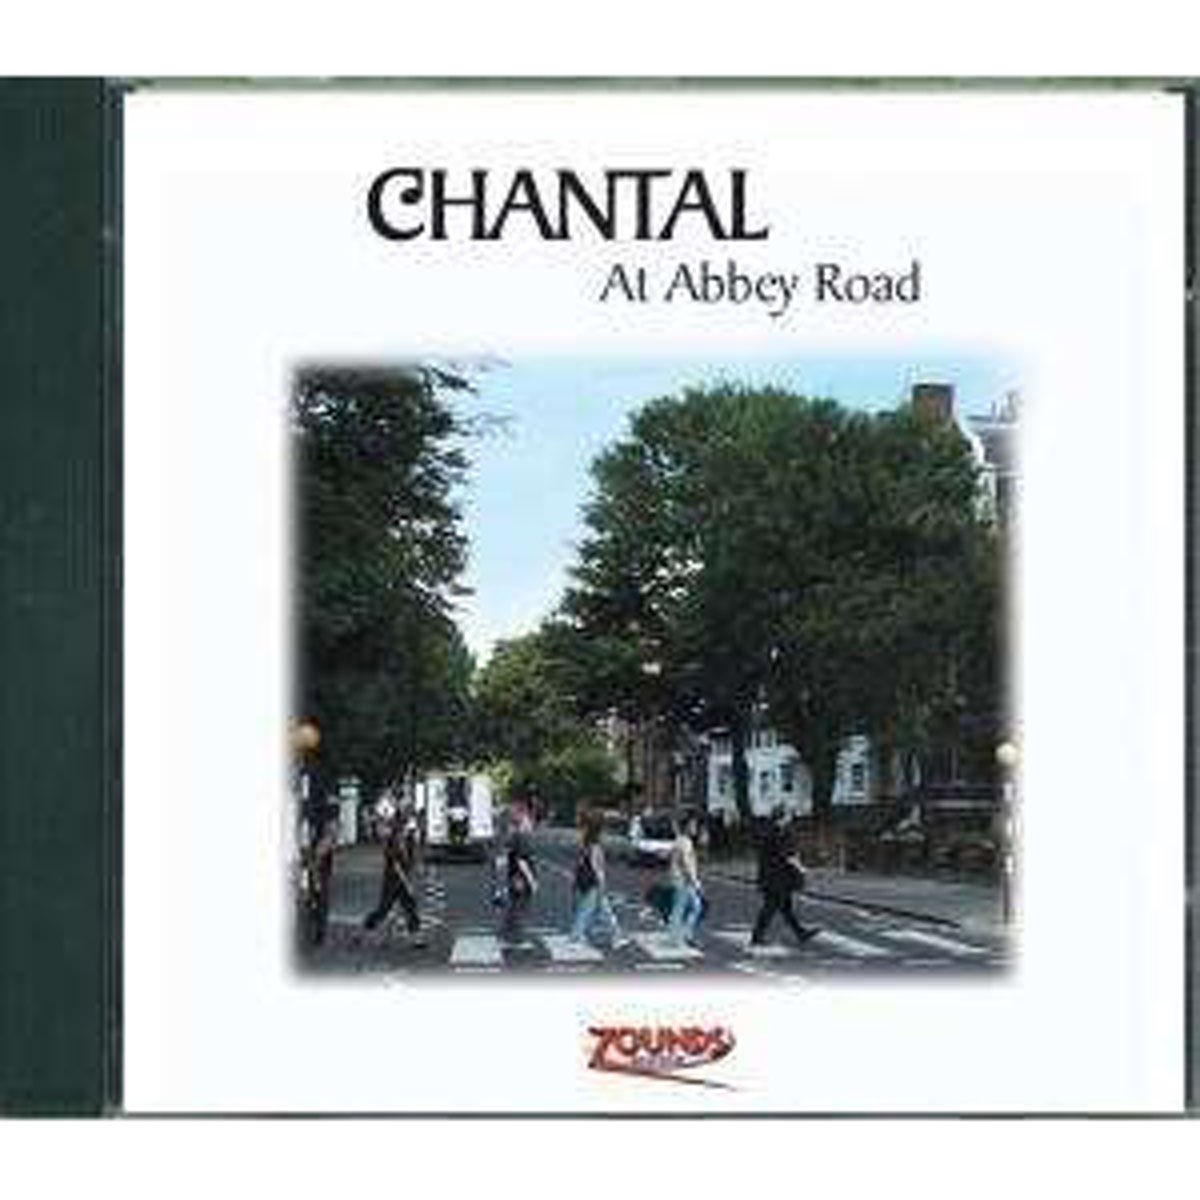 Cd roads. Abbey Road album Cover. Beatles "Abbey Road".